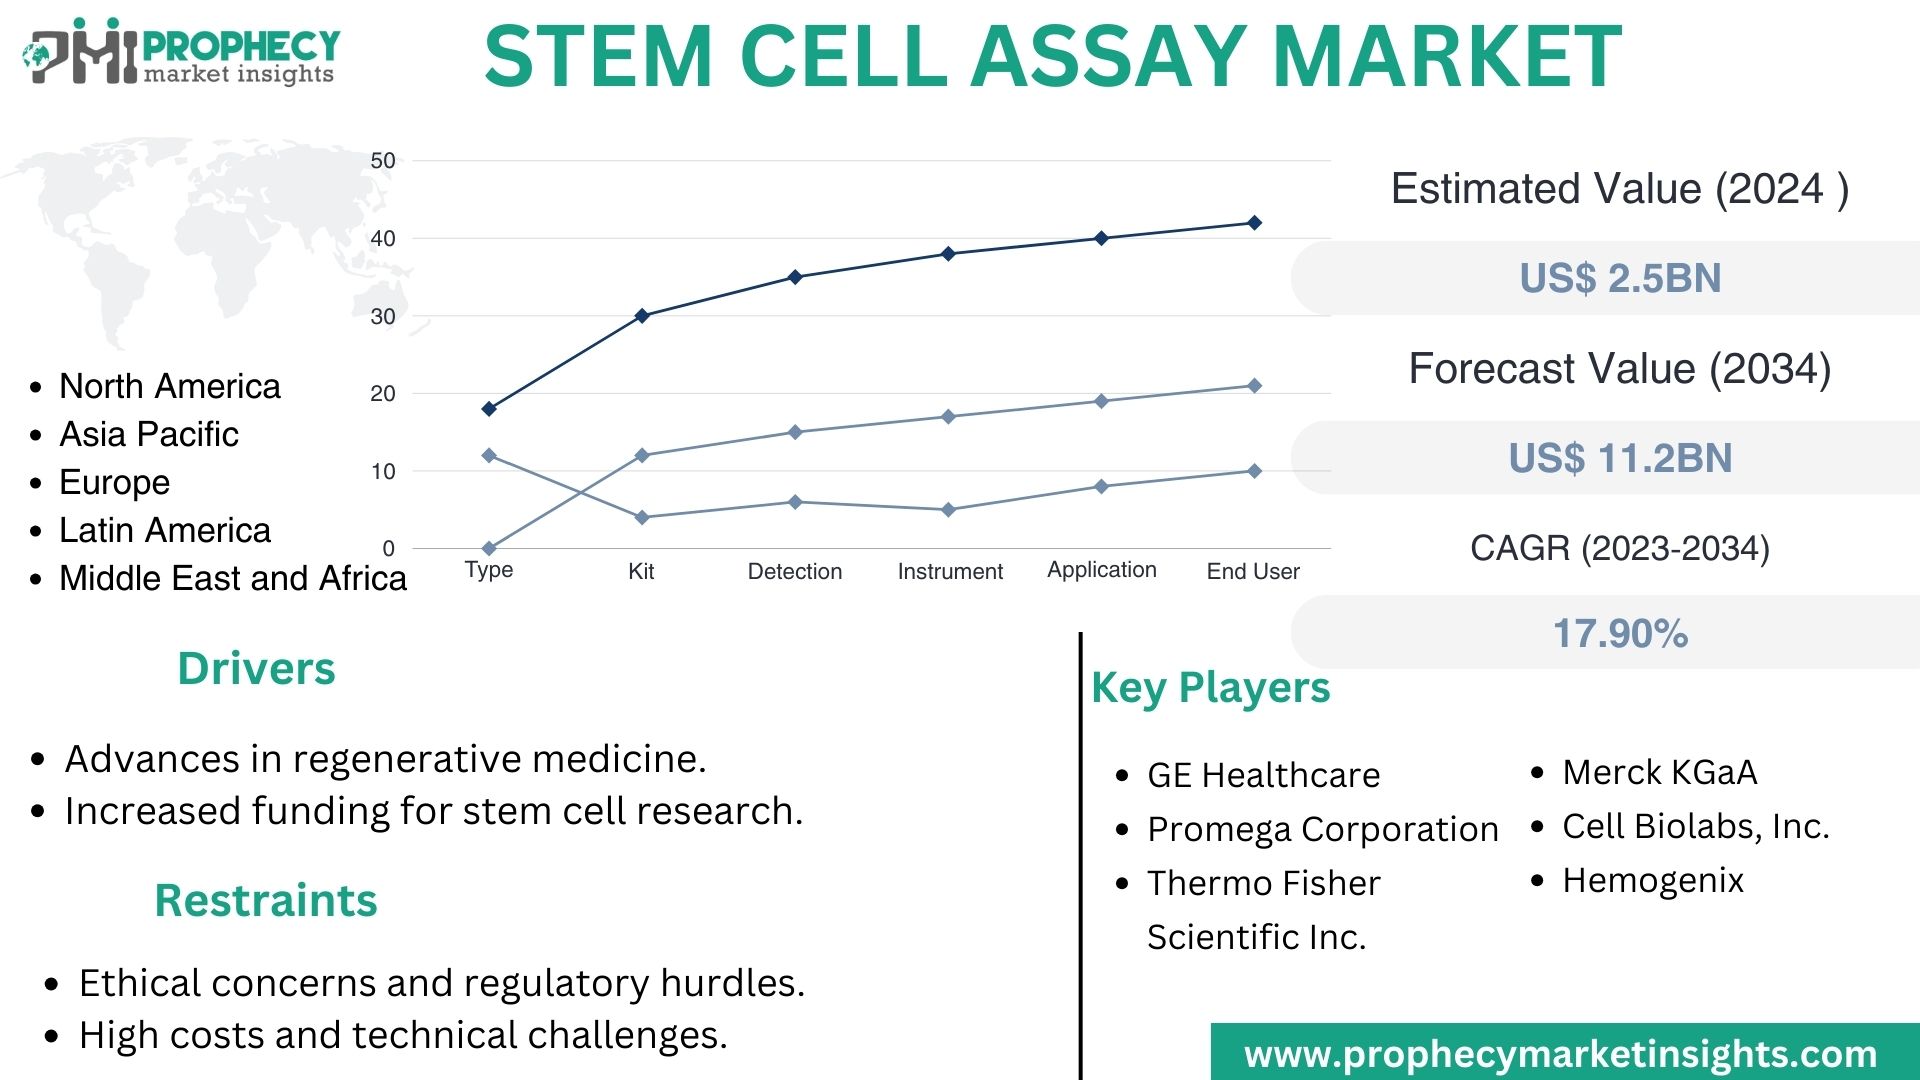 Stem Cell Assay Market